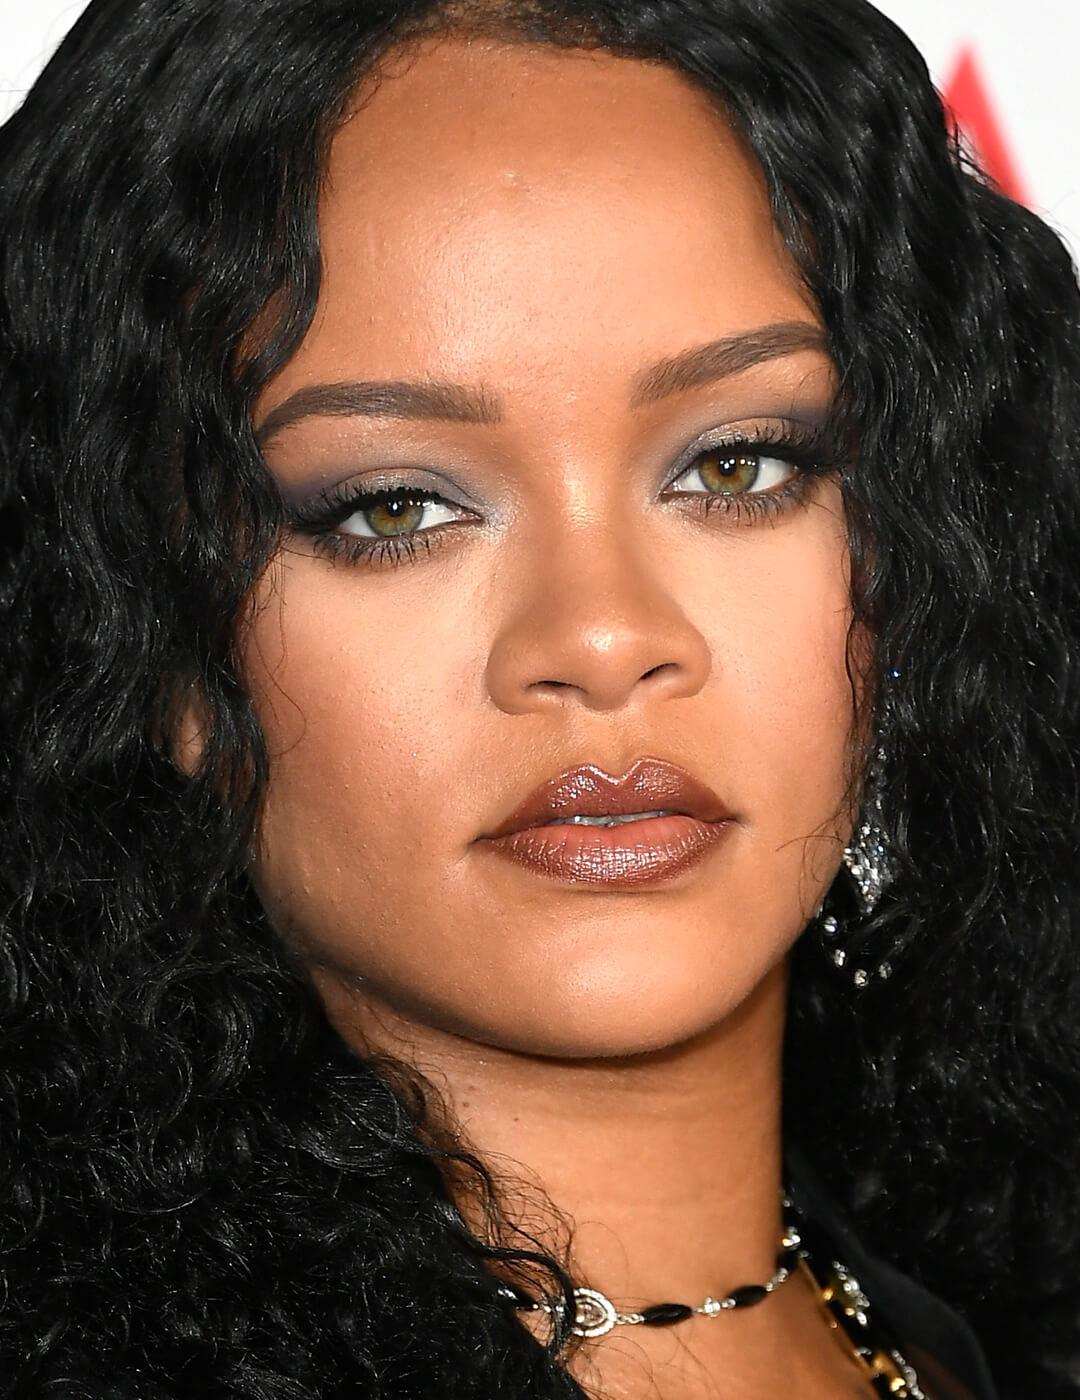 Rihanna rocking curly hair and gunmetal grey eyeshadow makeup look